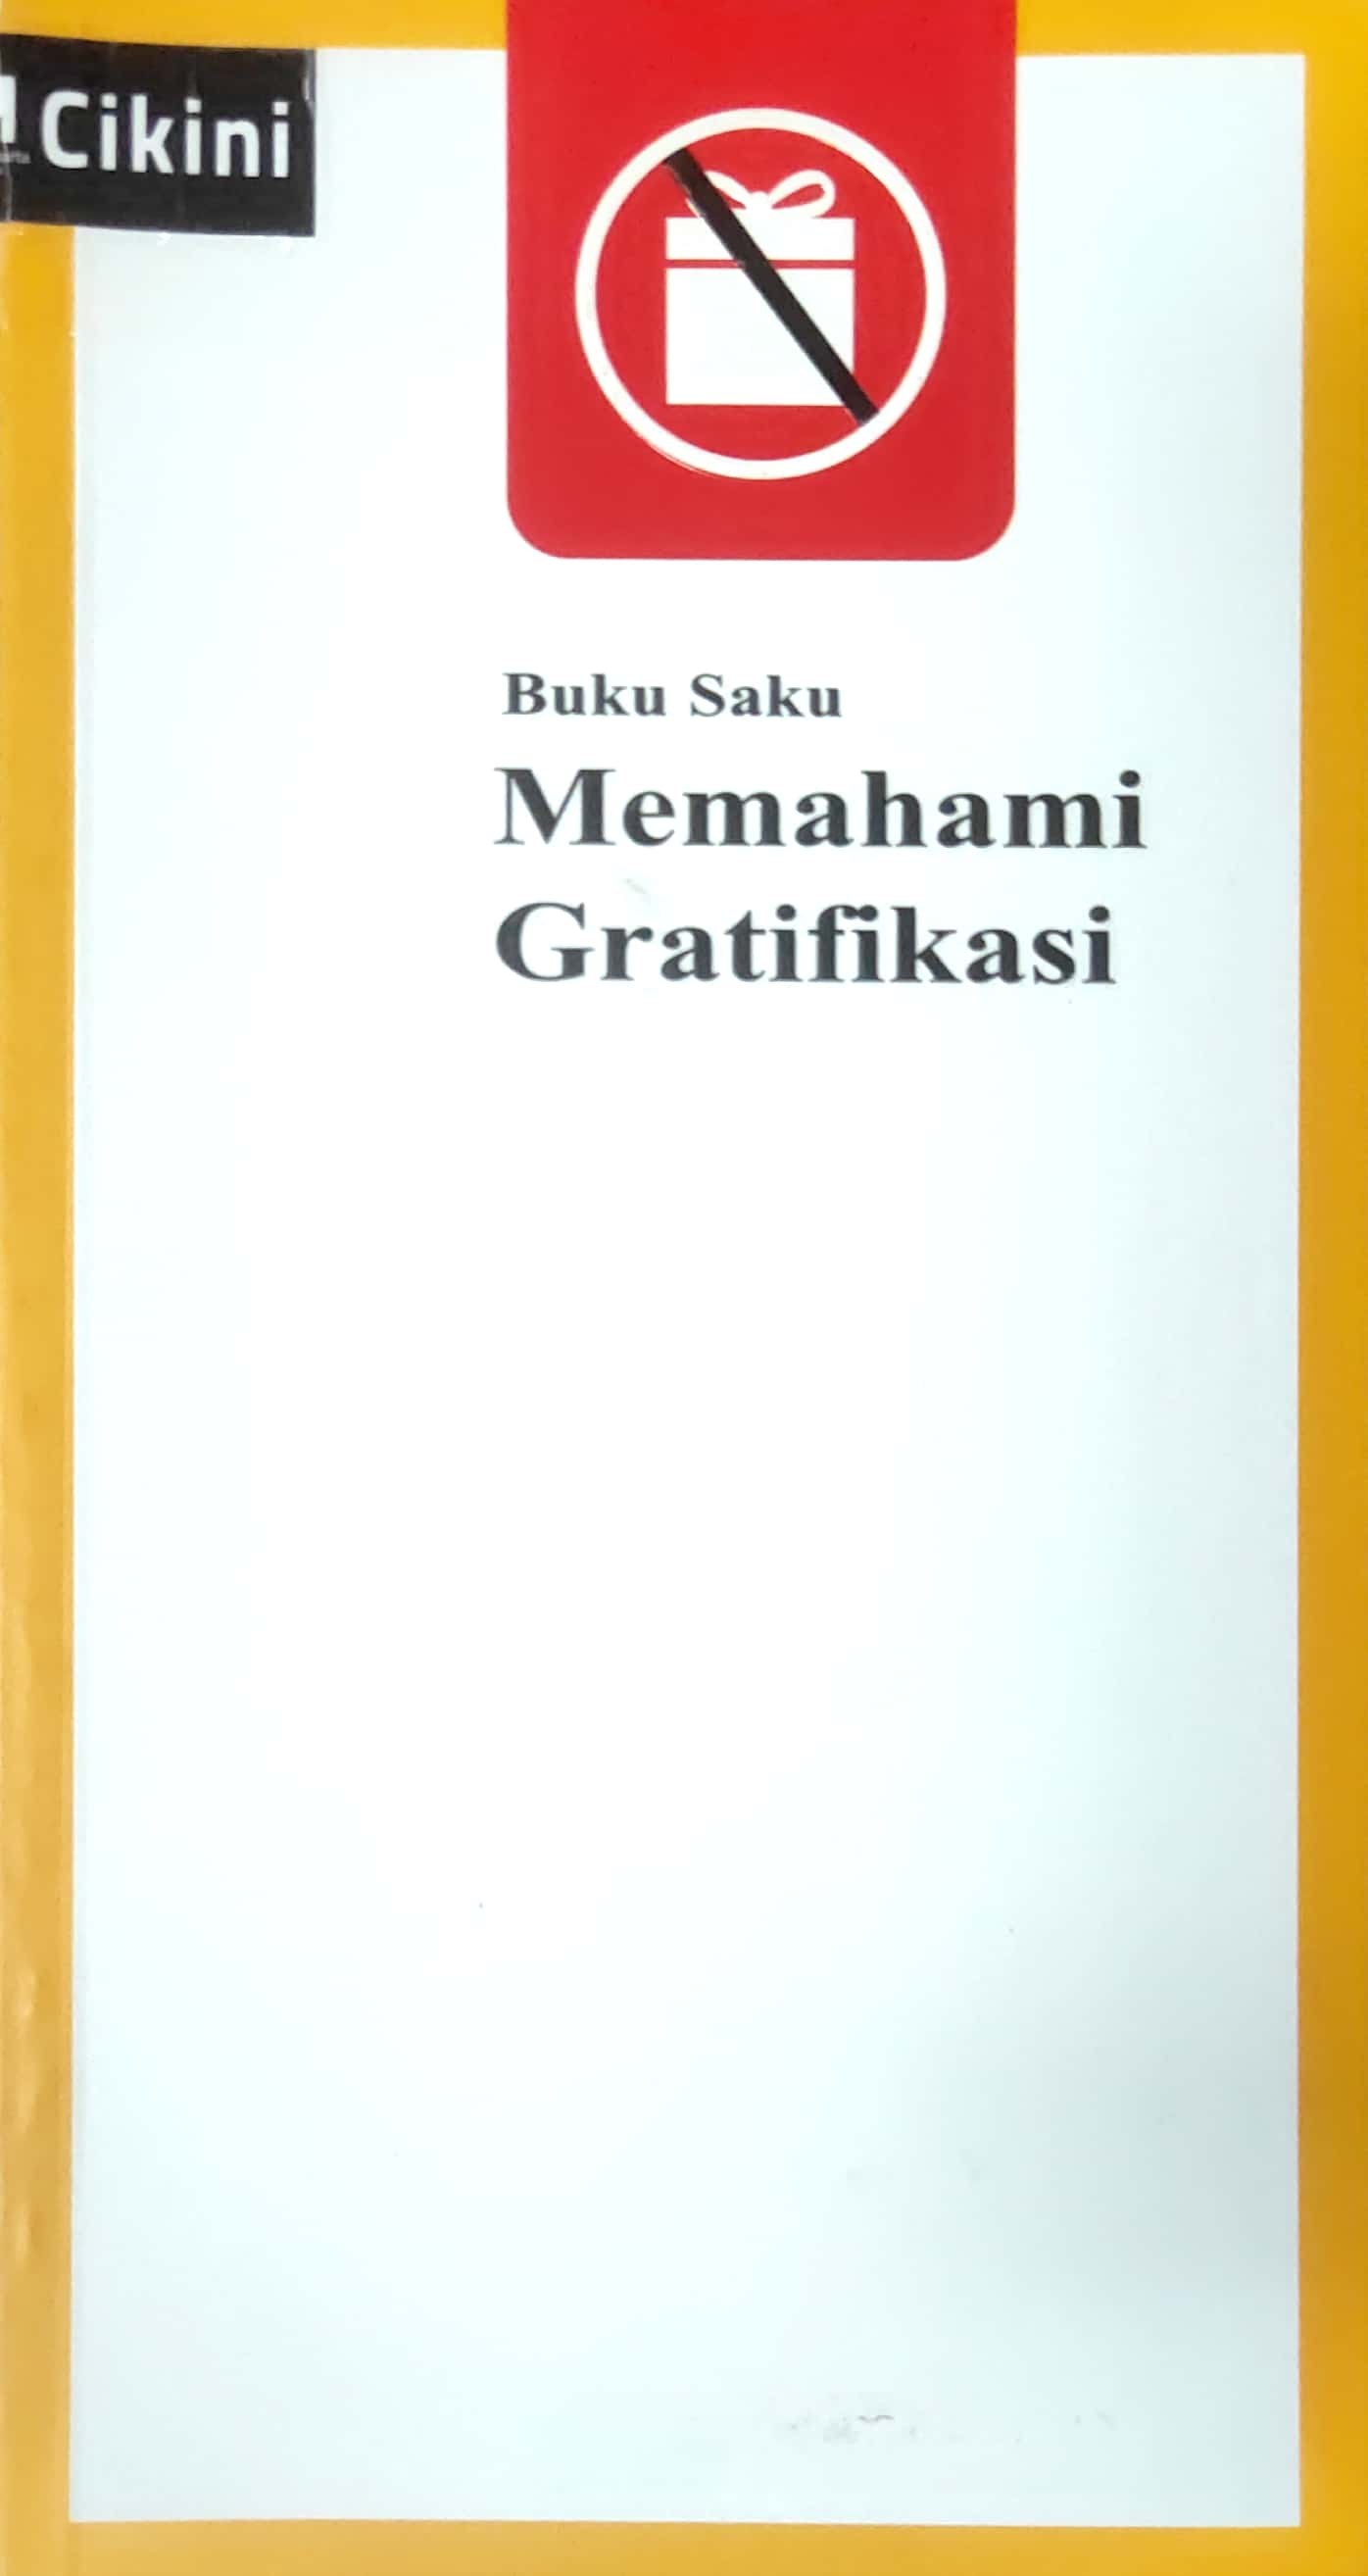 Buku saku memahami gratifikasi